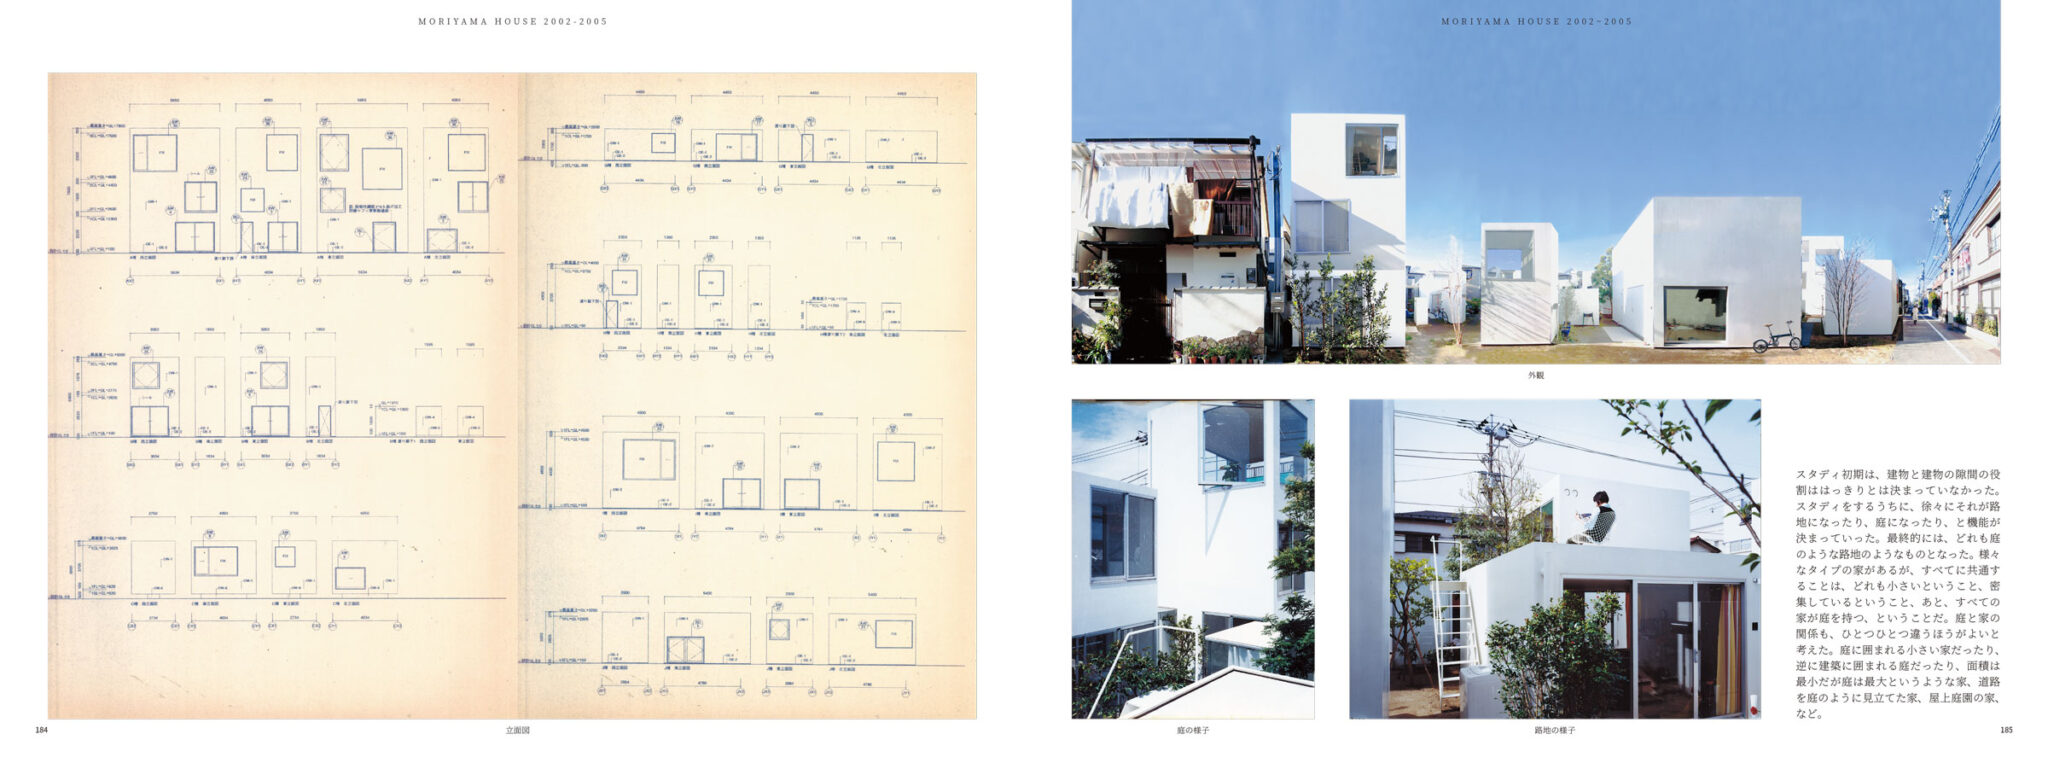 GAアーキテクト 世界の建築家 18 妹島和世 西沢立衛1987-2006-